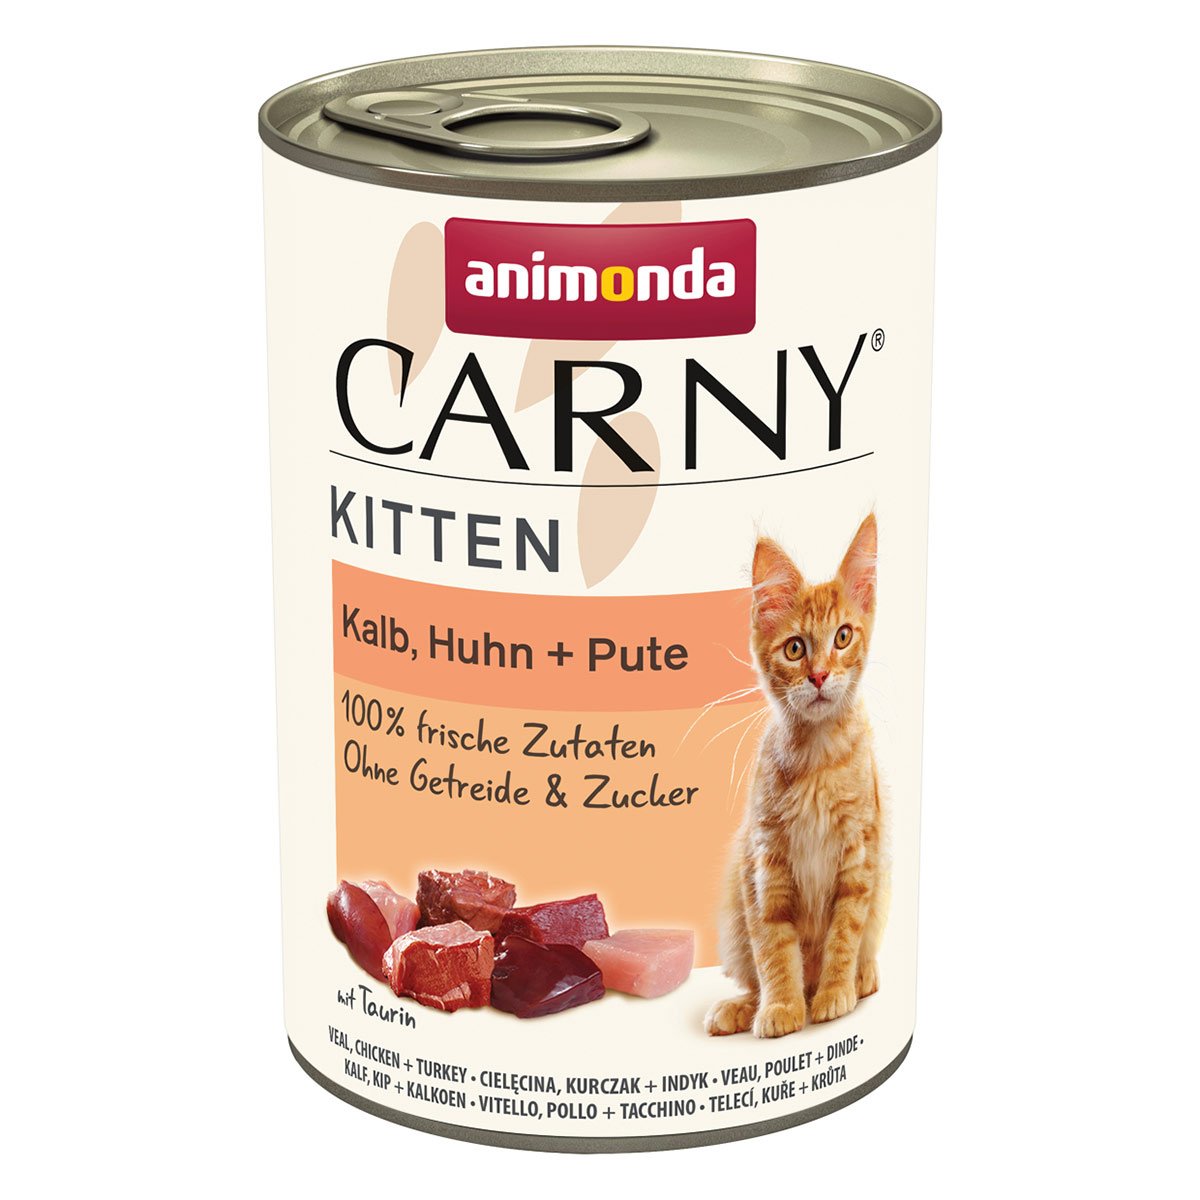 animonda Carny Kitten Kalb, Huhn + Pute 24x400g von animonda Carny